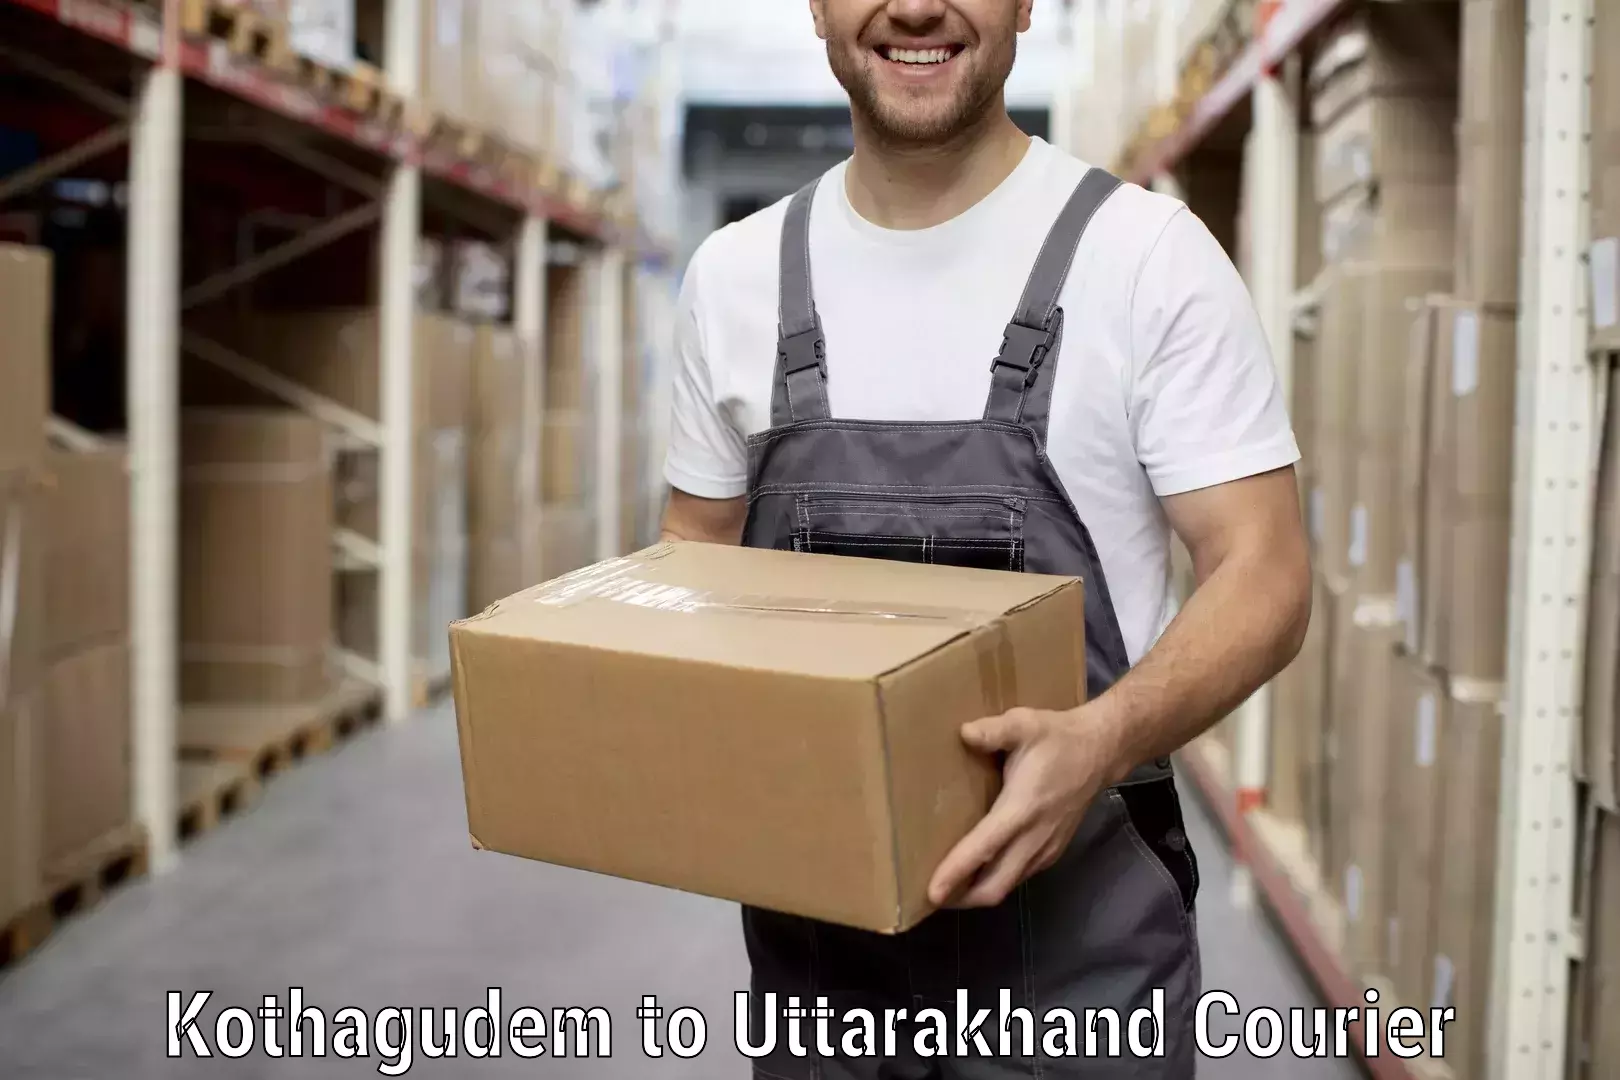 Furniture delivery service Kothagudem to Srinagar Pauri Garhwal